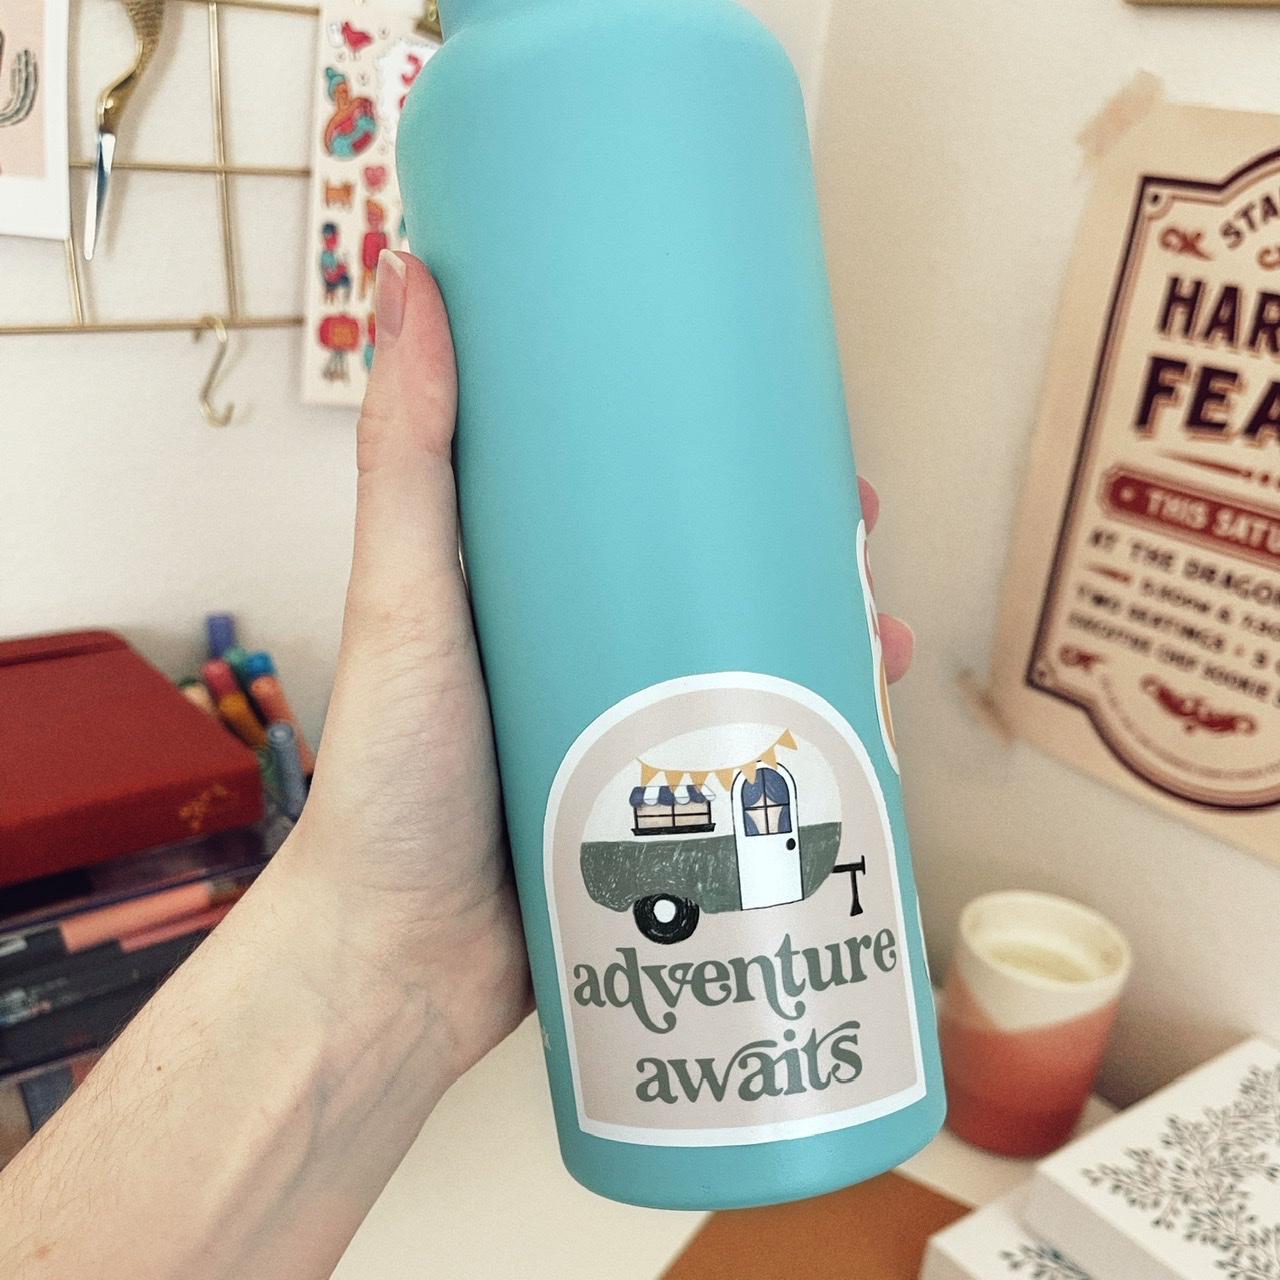 Adventure Awaits Water Bottle